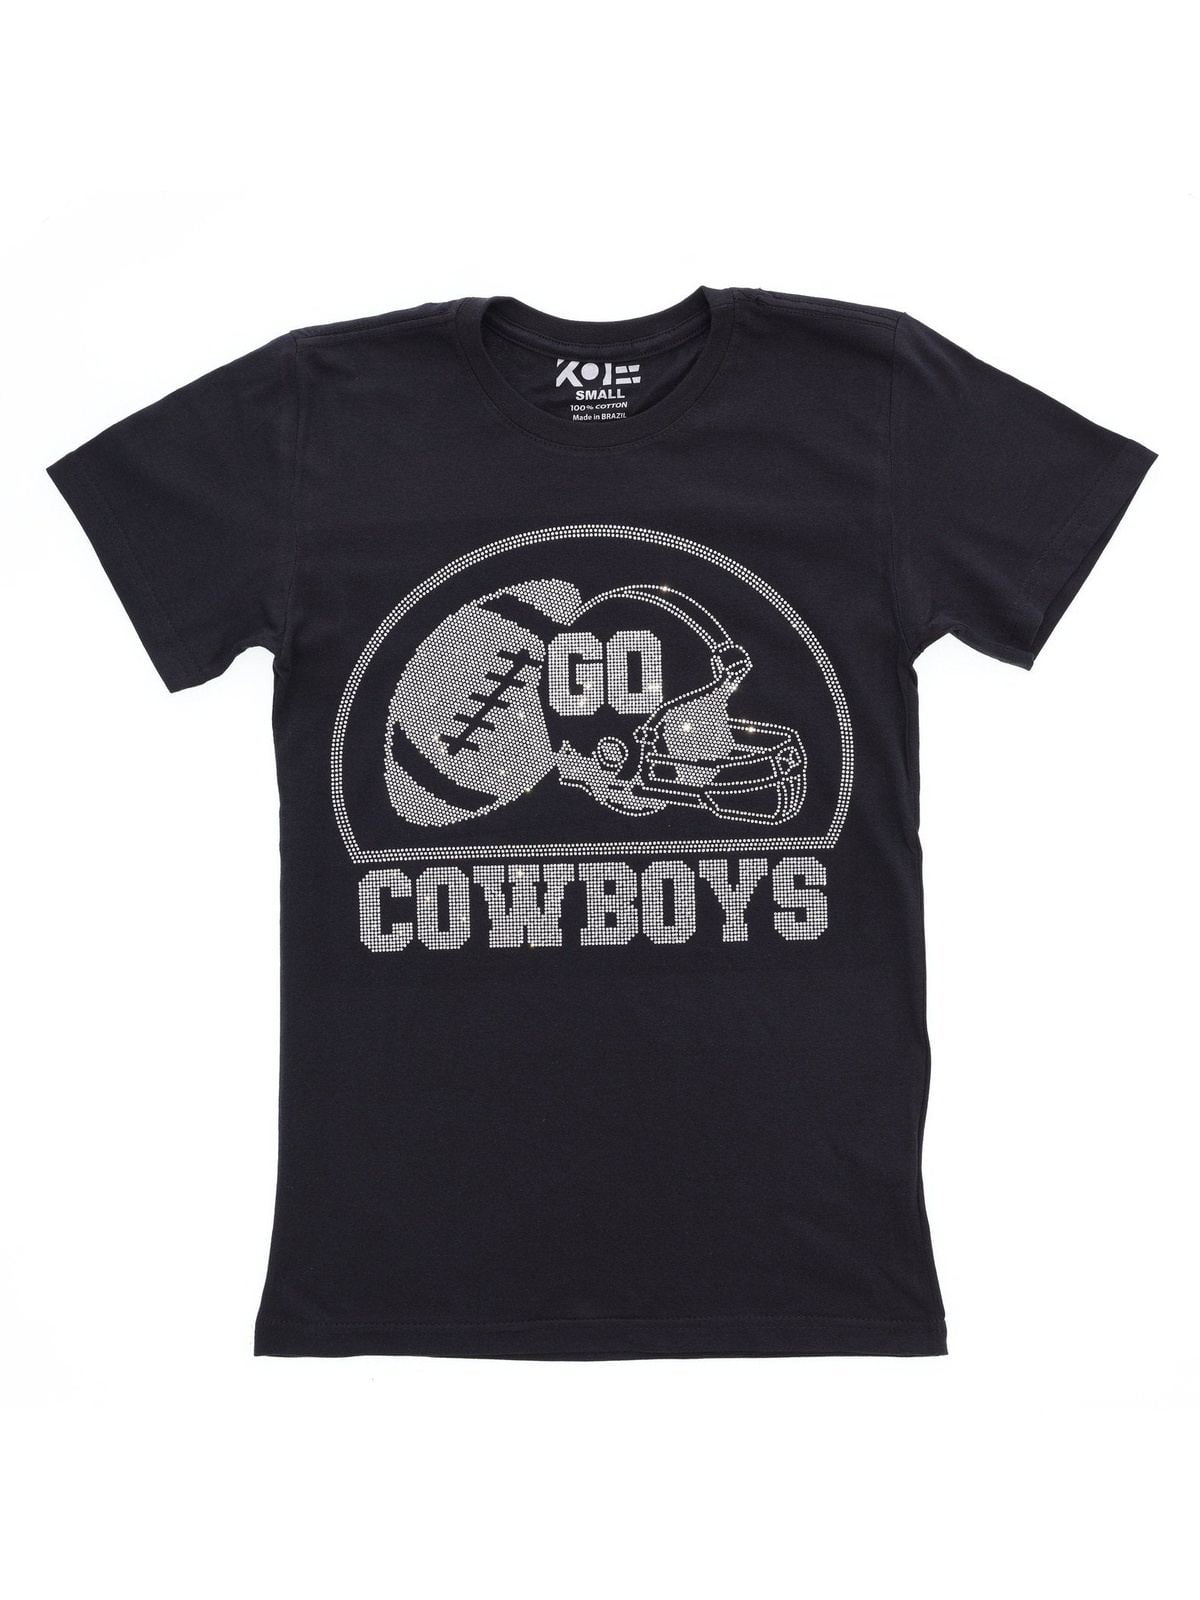 Cowboys Shirt, Football Tee, Dallas T-shirt, Rhinestone Shirt, Bling Bling  Tee, Short Sleeve T-shirt, Game Days Shirt, Fans shirt, go cowboy-White /  Unisex Adult - 2XL 